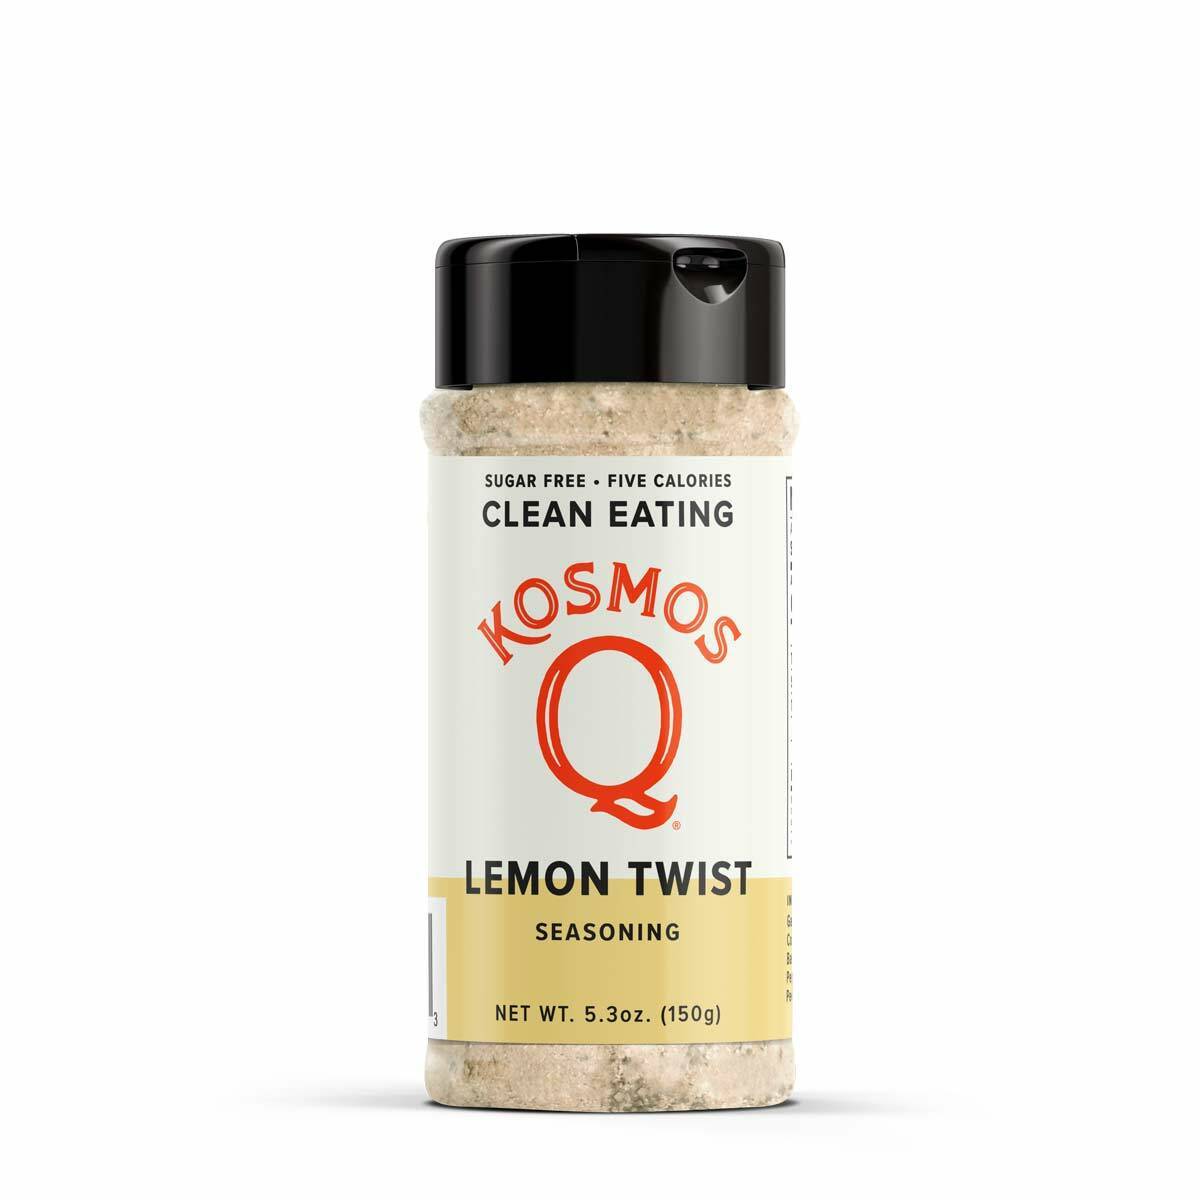 https://cdn.shopify.com/s/files/1/0504/1926/9791/products/kosmo-s-q-clean-eating-seasonings-lemon-twist-paleo-keto-clean-eating-seasoning-30169736413343_1600x.jpg?v=1628096398